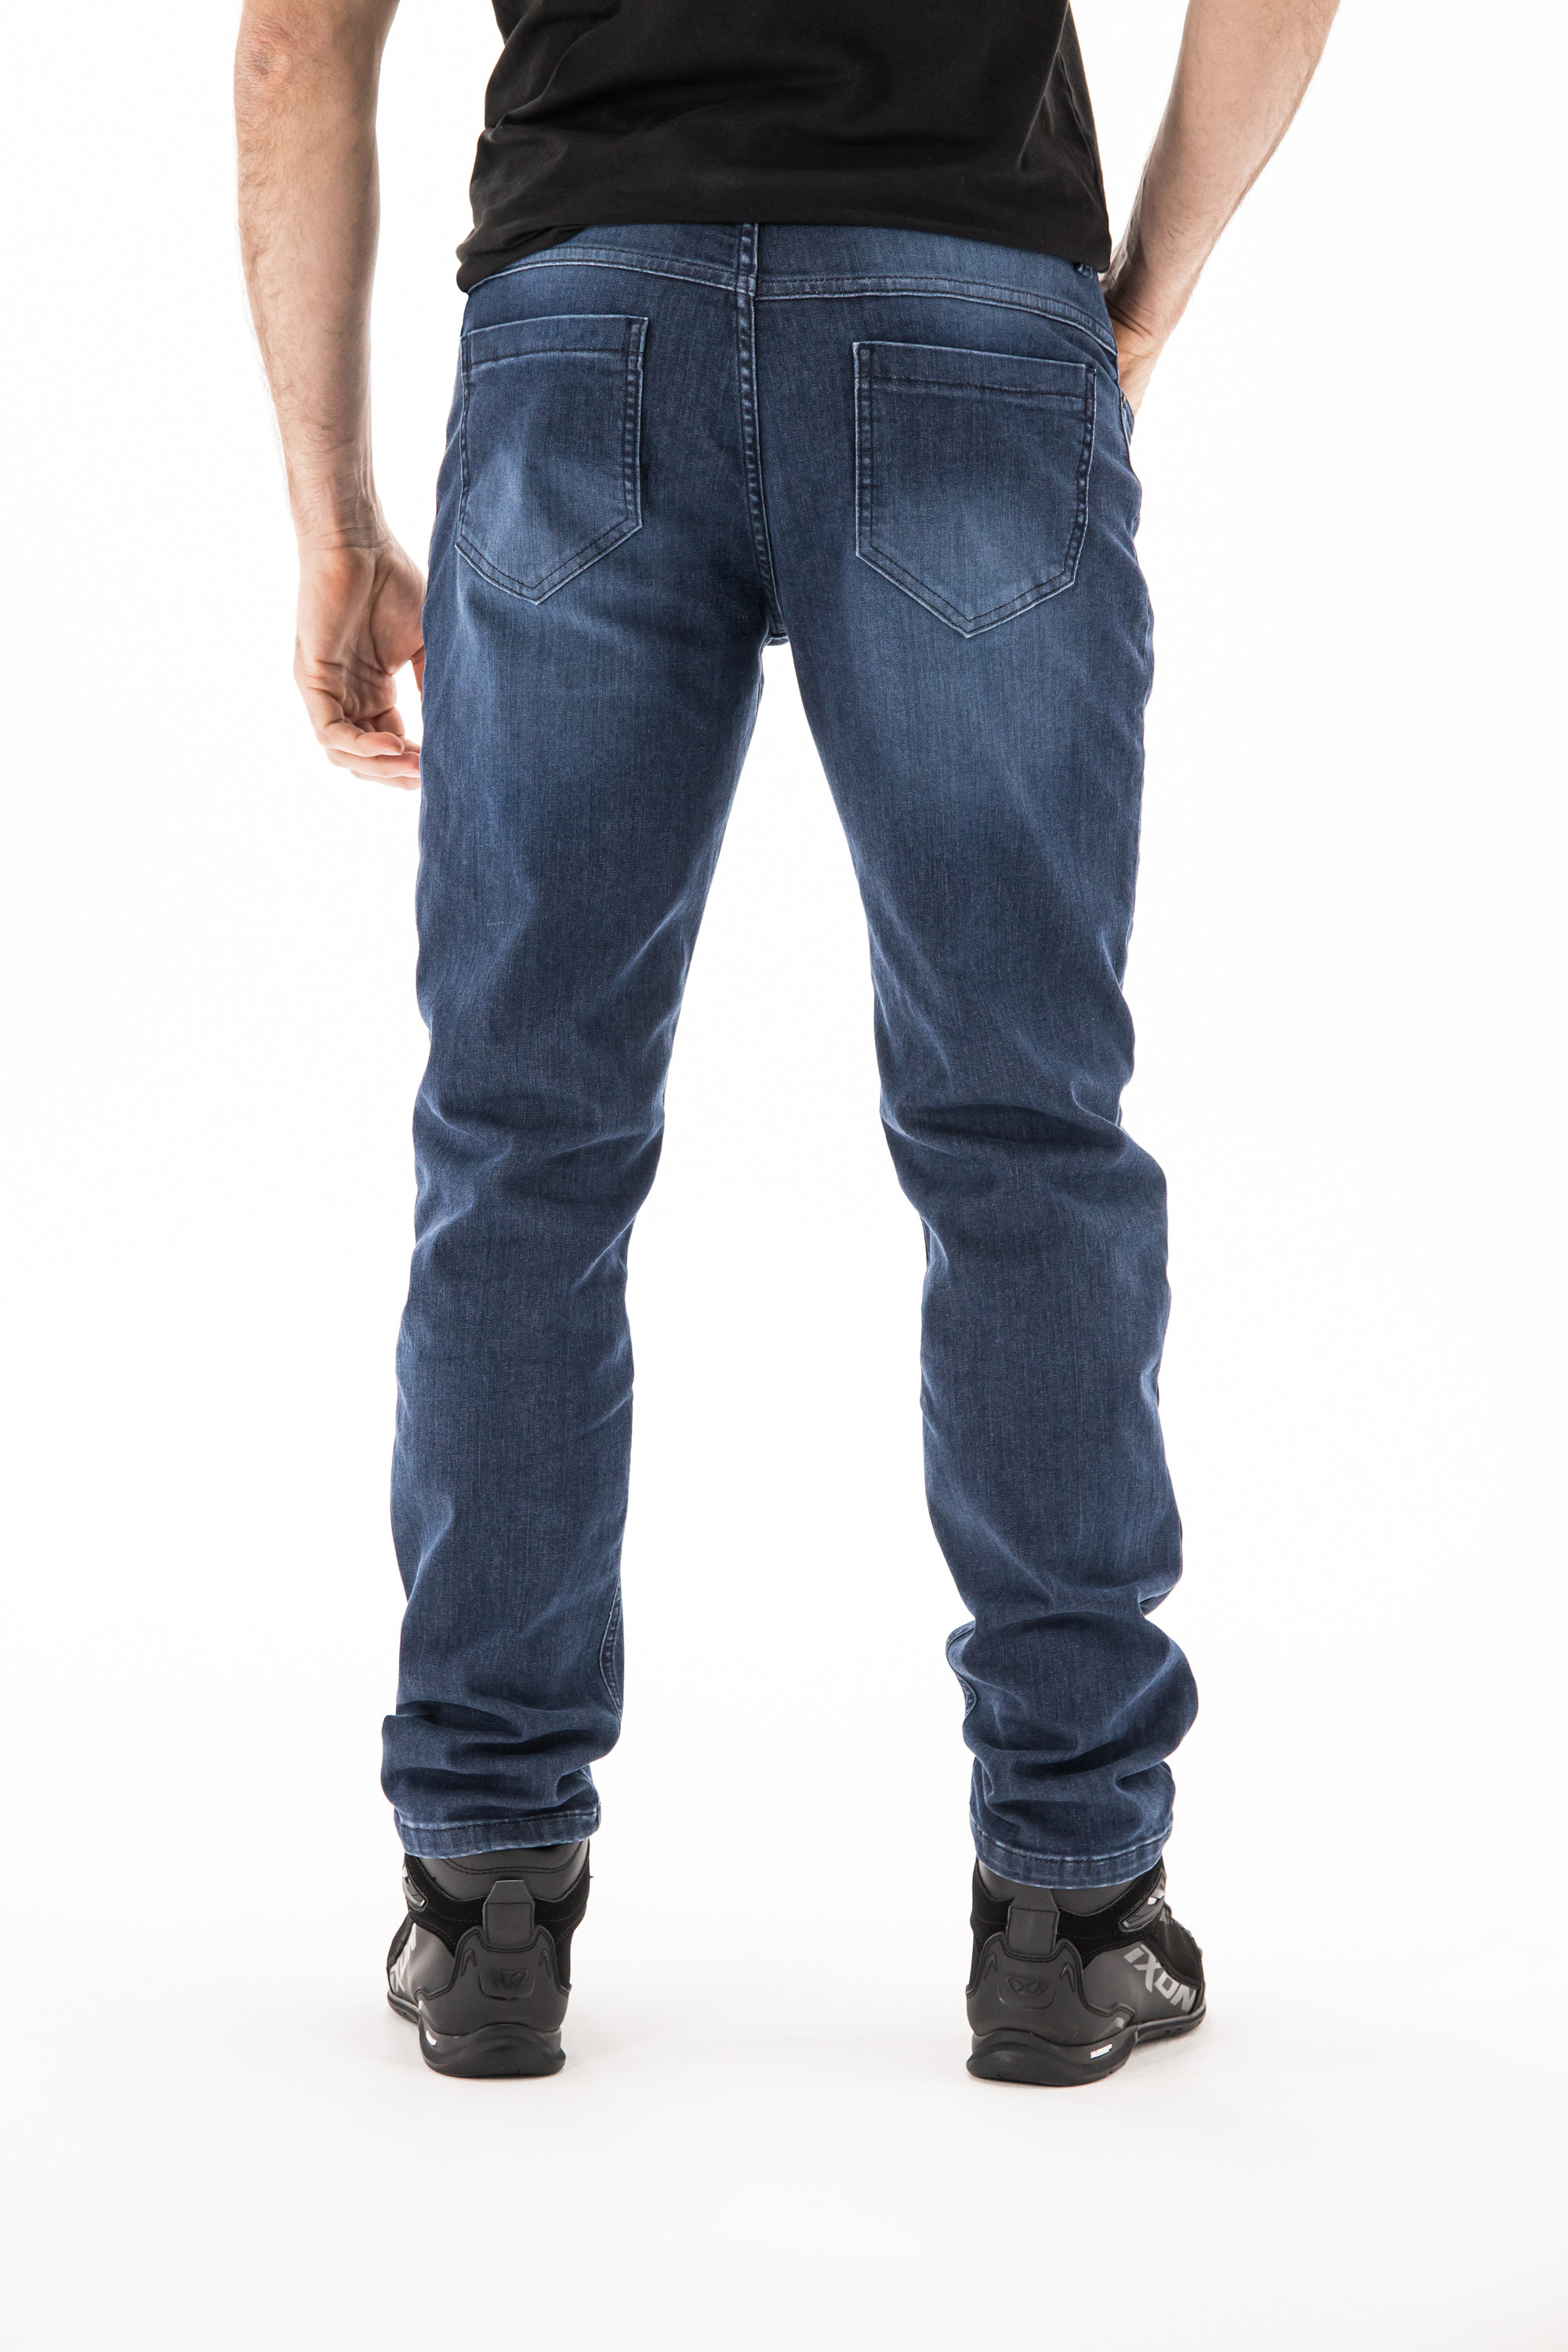 Pantalon Moto Textile Jeans CE IXON MARCO